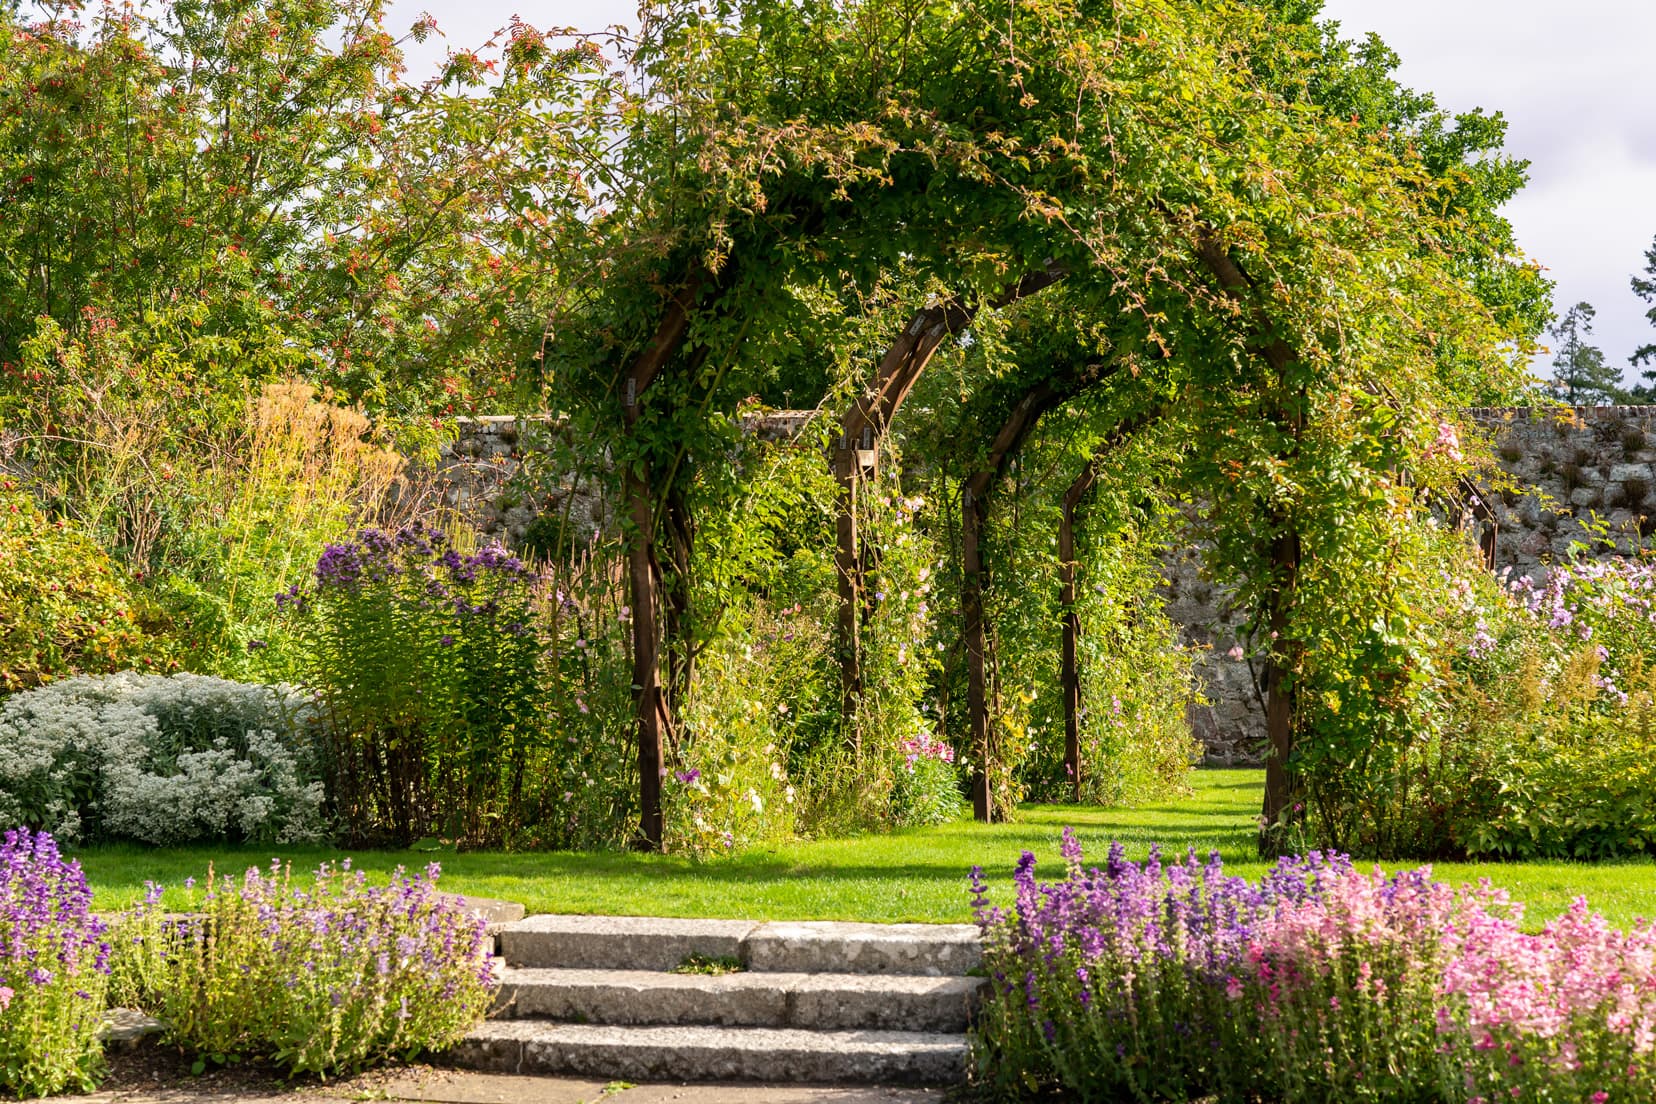 Castle near Aberdeen — Drum Castle gardens with arch ways of green vines